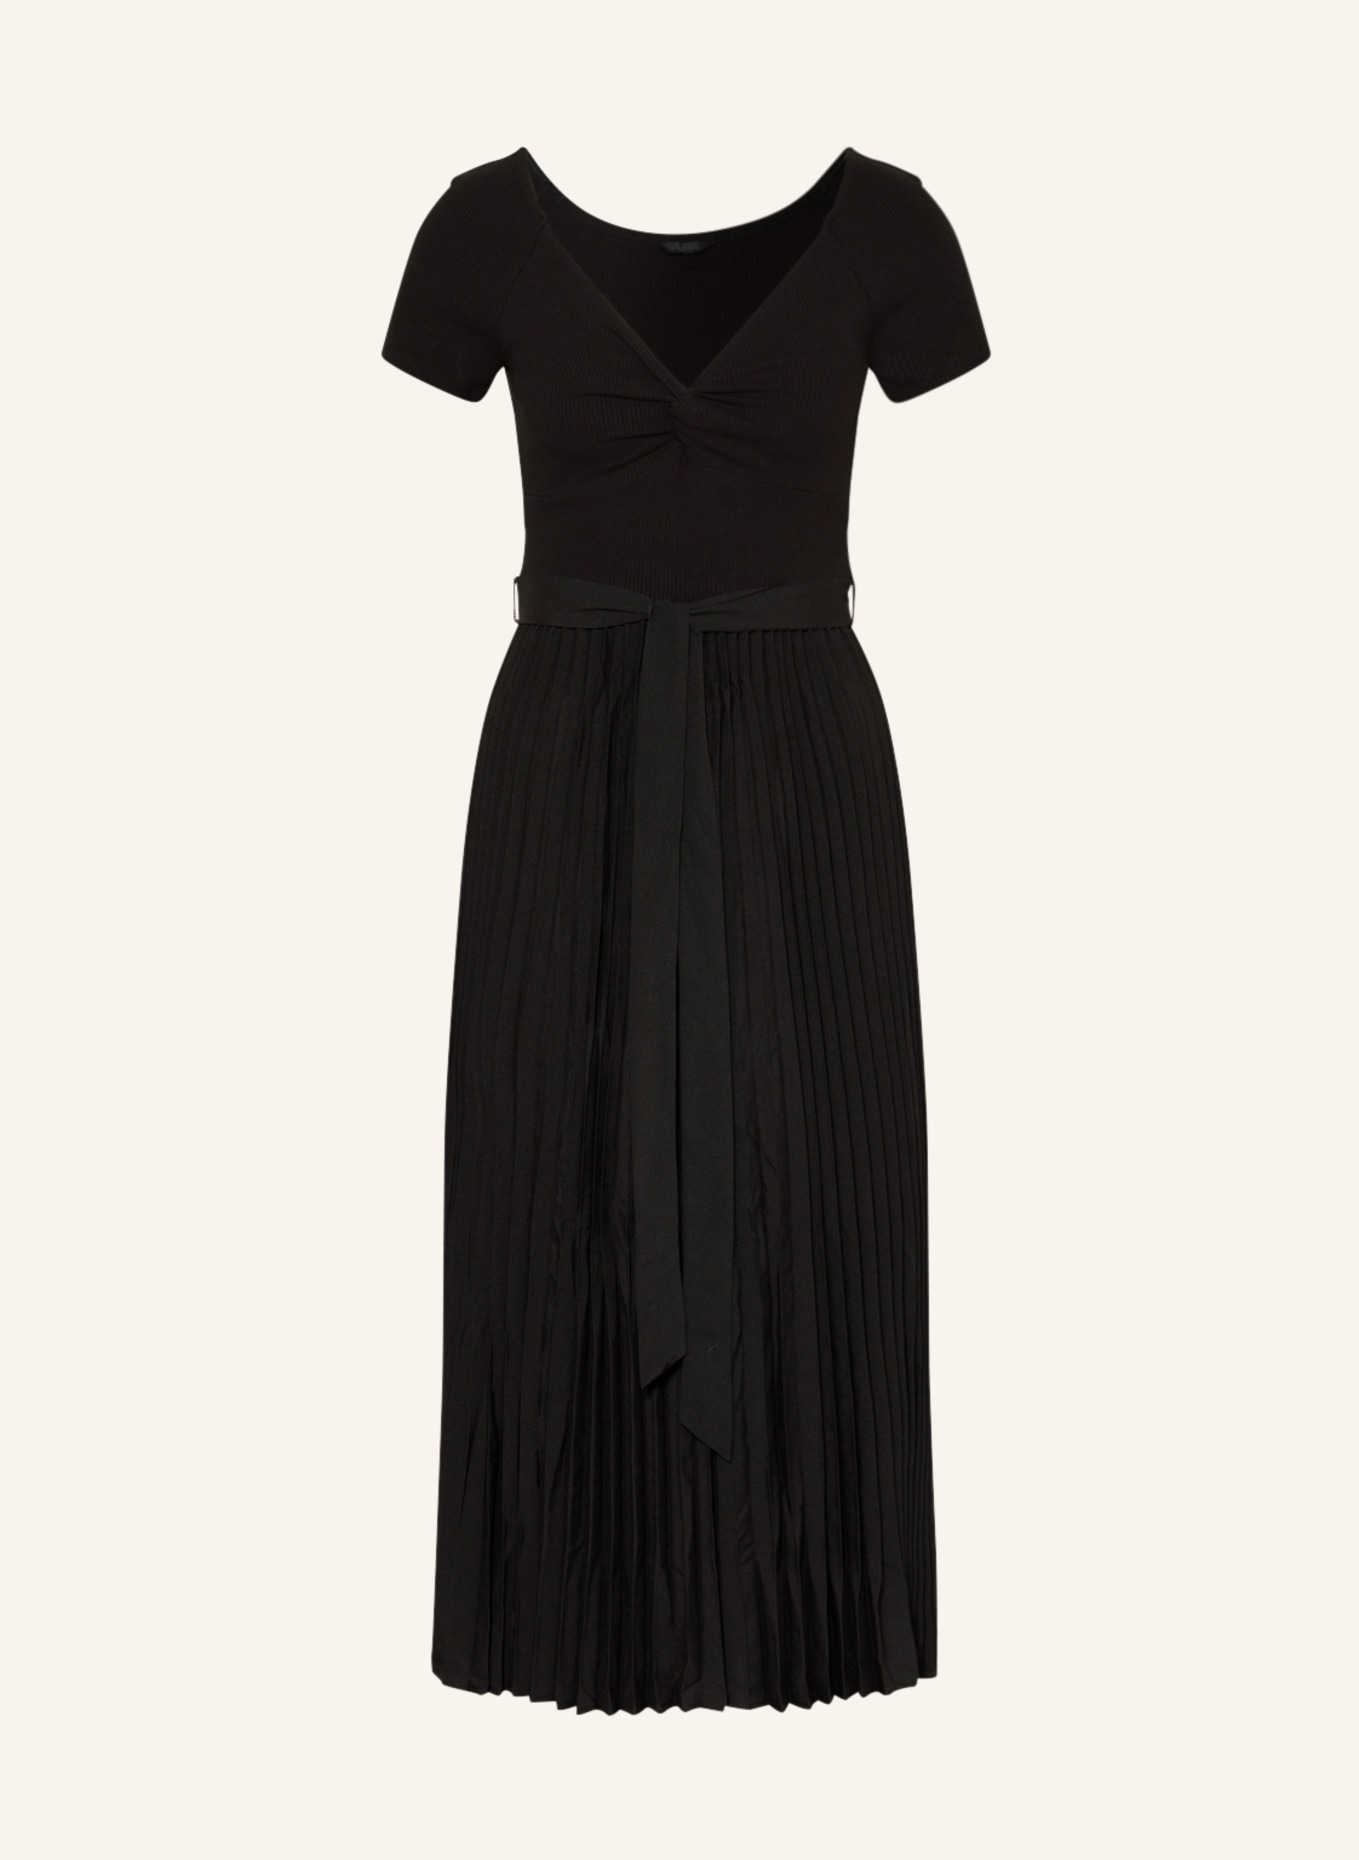 GUESS Kleid ERYNN im Materialmix, Farbe: SCHWARZ (Bild 1)